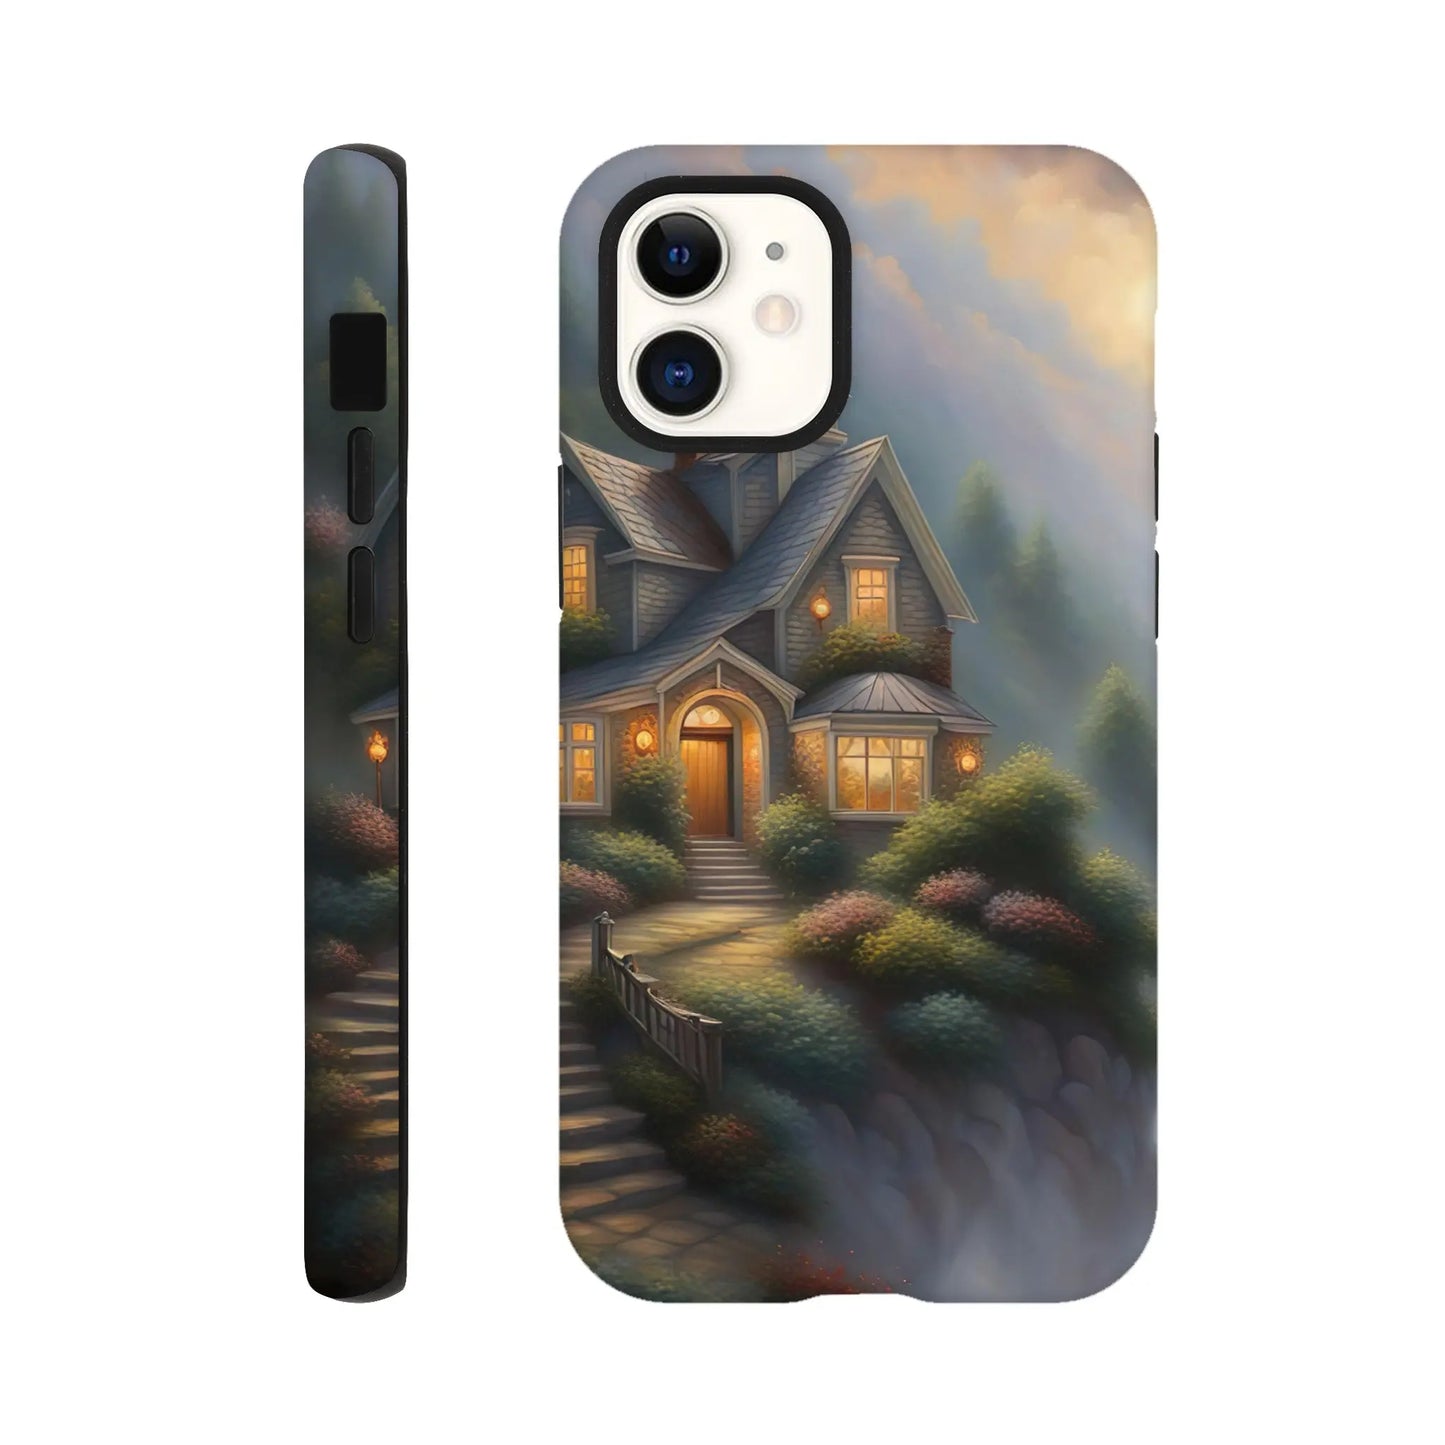 Smartphone-Hülle "Hart" - Traumlandschaft - Digitaler Stil, KI-Kunst RolConArt, Surreale Landschaften, iPhone-12-Mini